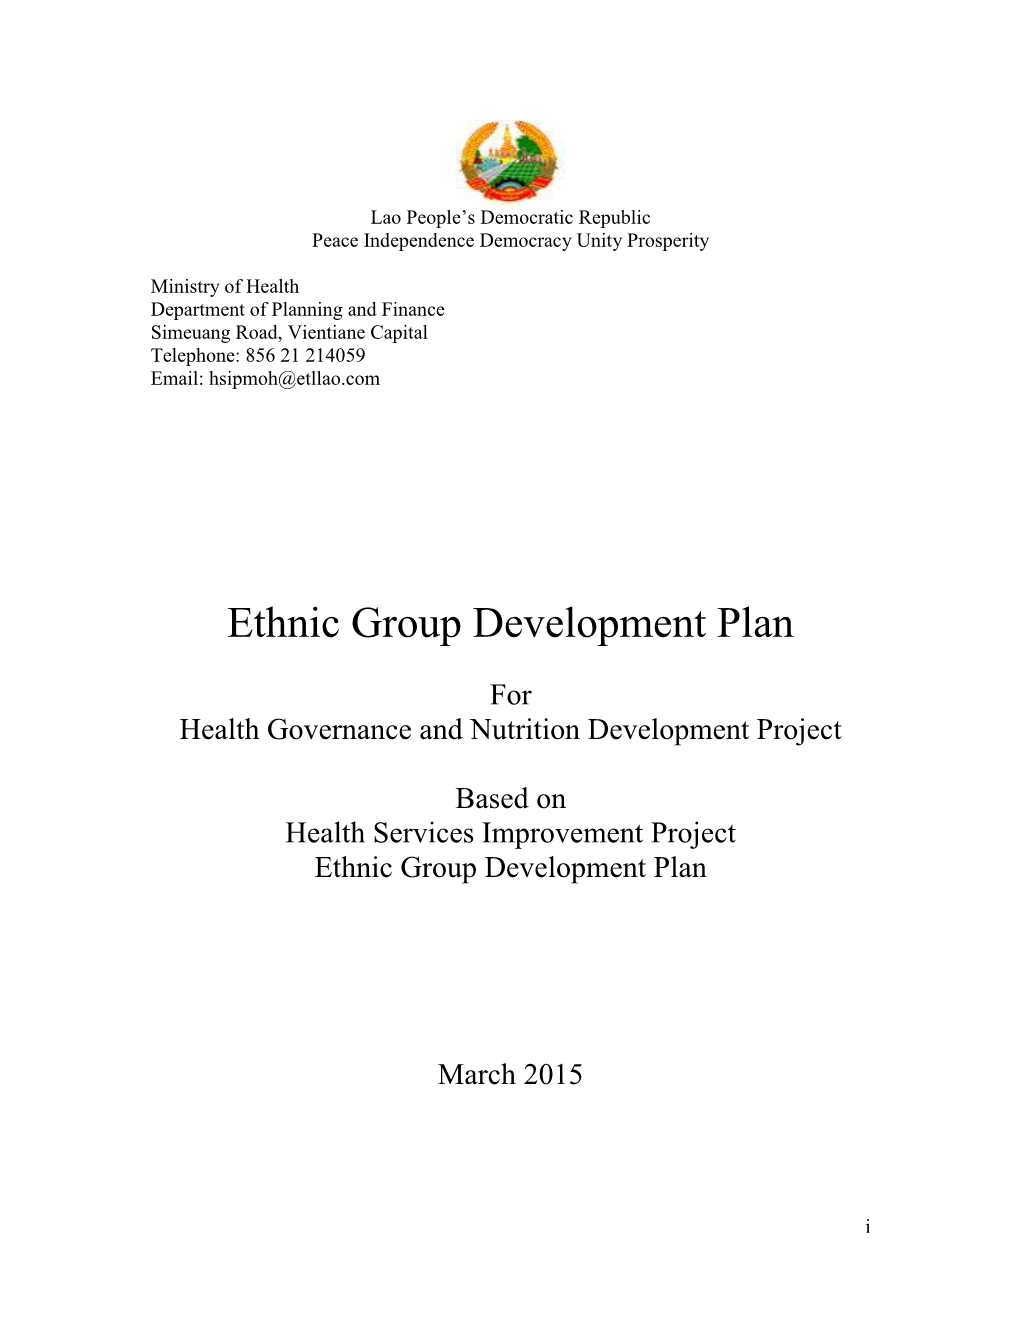 Ethnic Group Development Plan